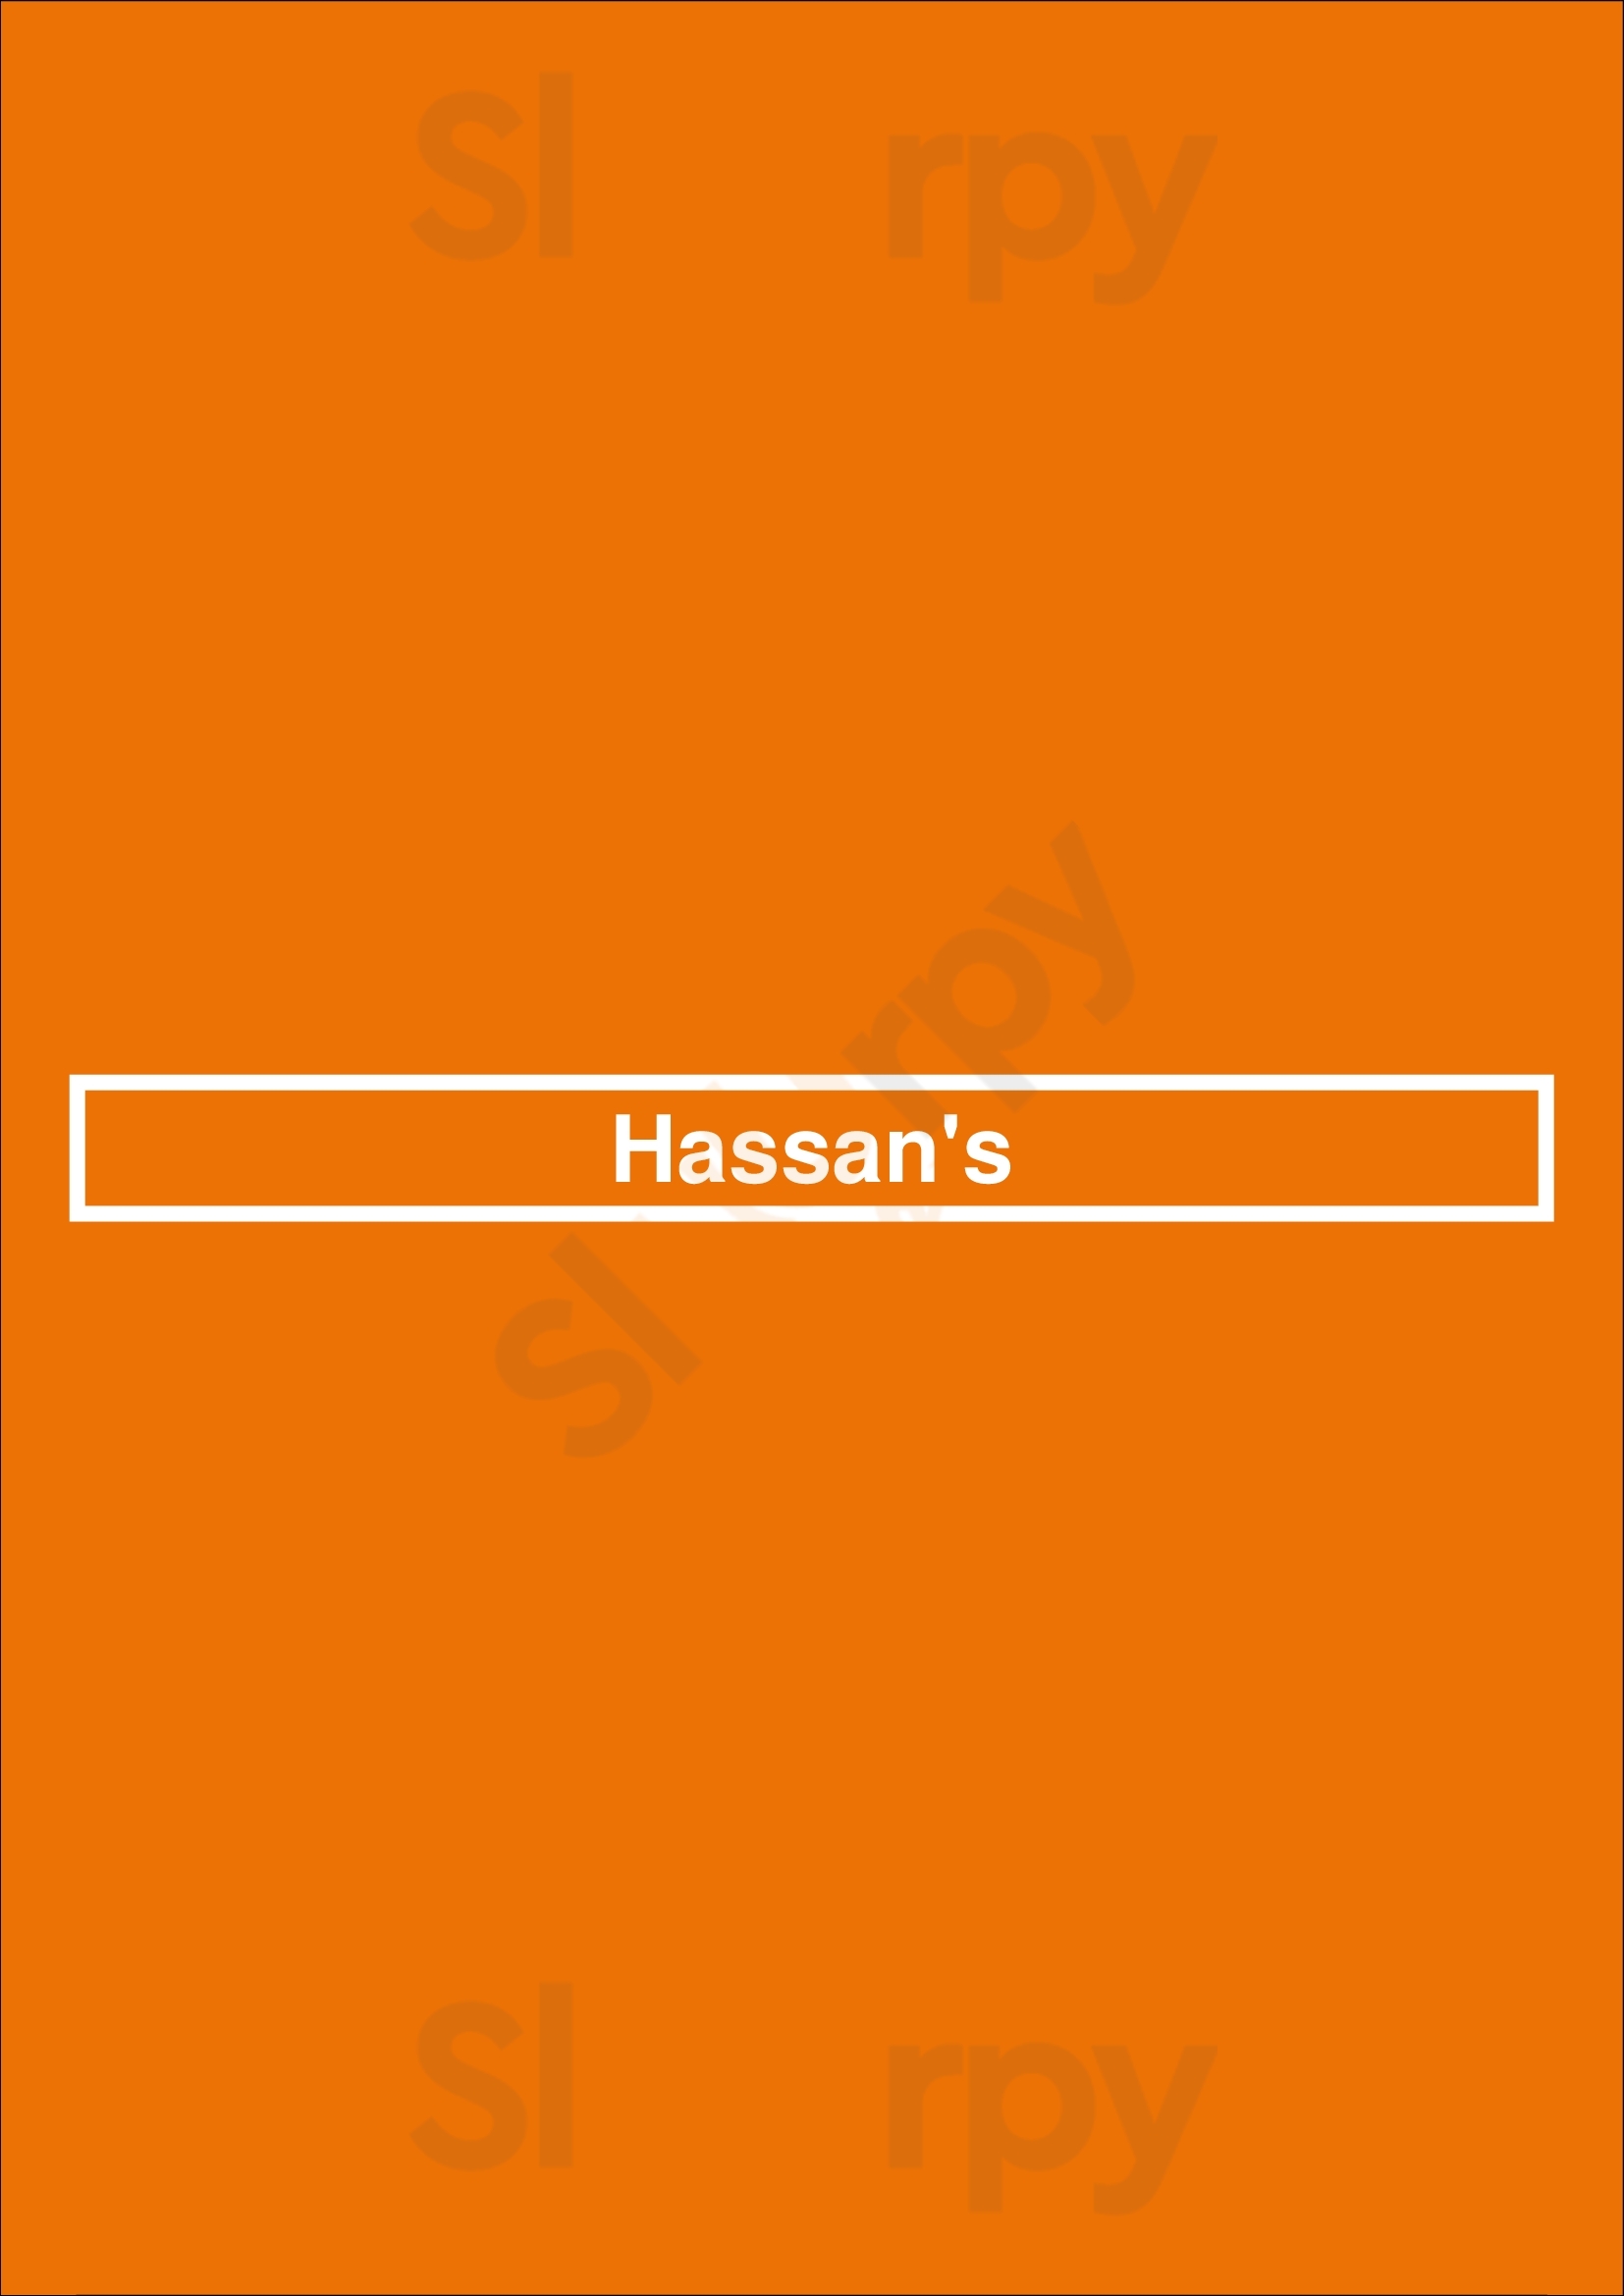 Hassan's Brighouse Menu - 1